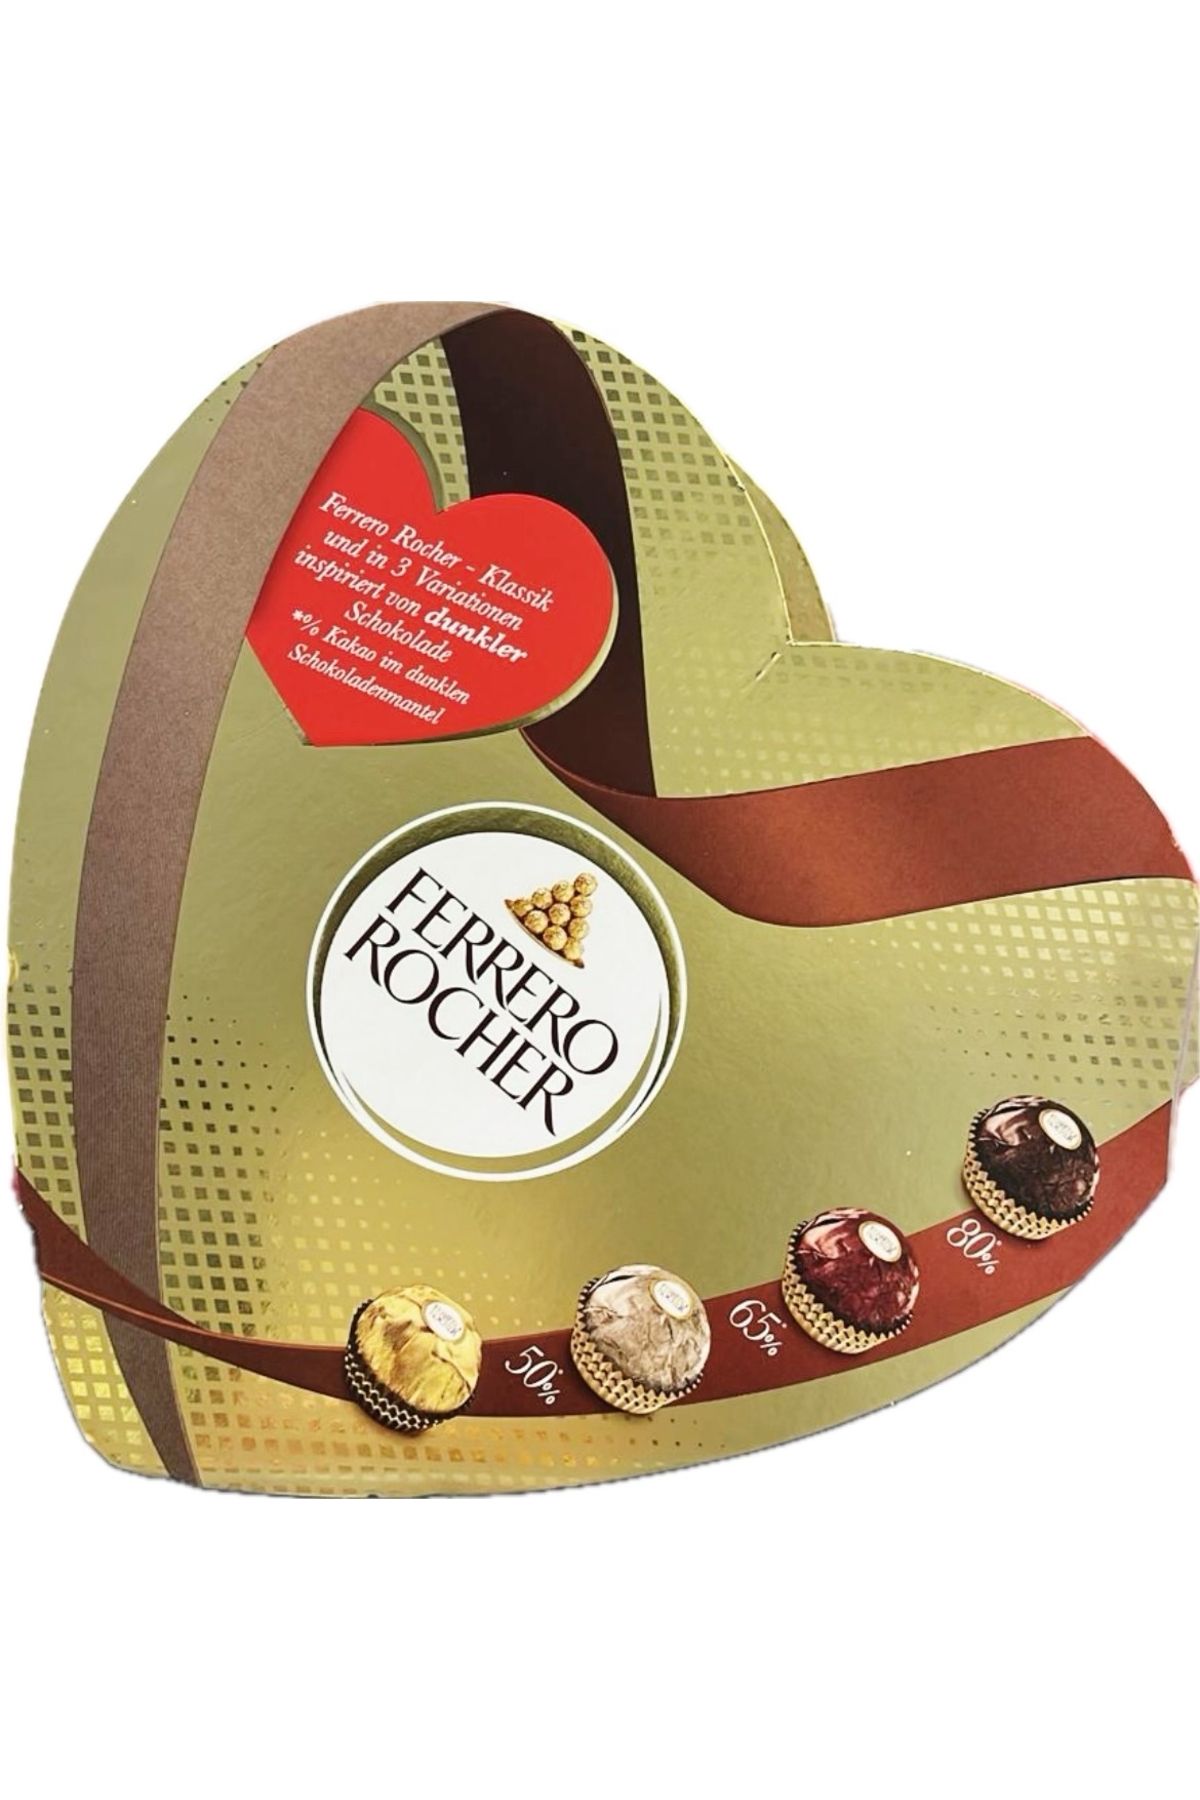 Ferrero Rocher SELECTİON HERZ 125 GR